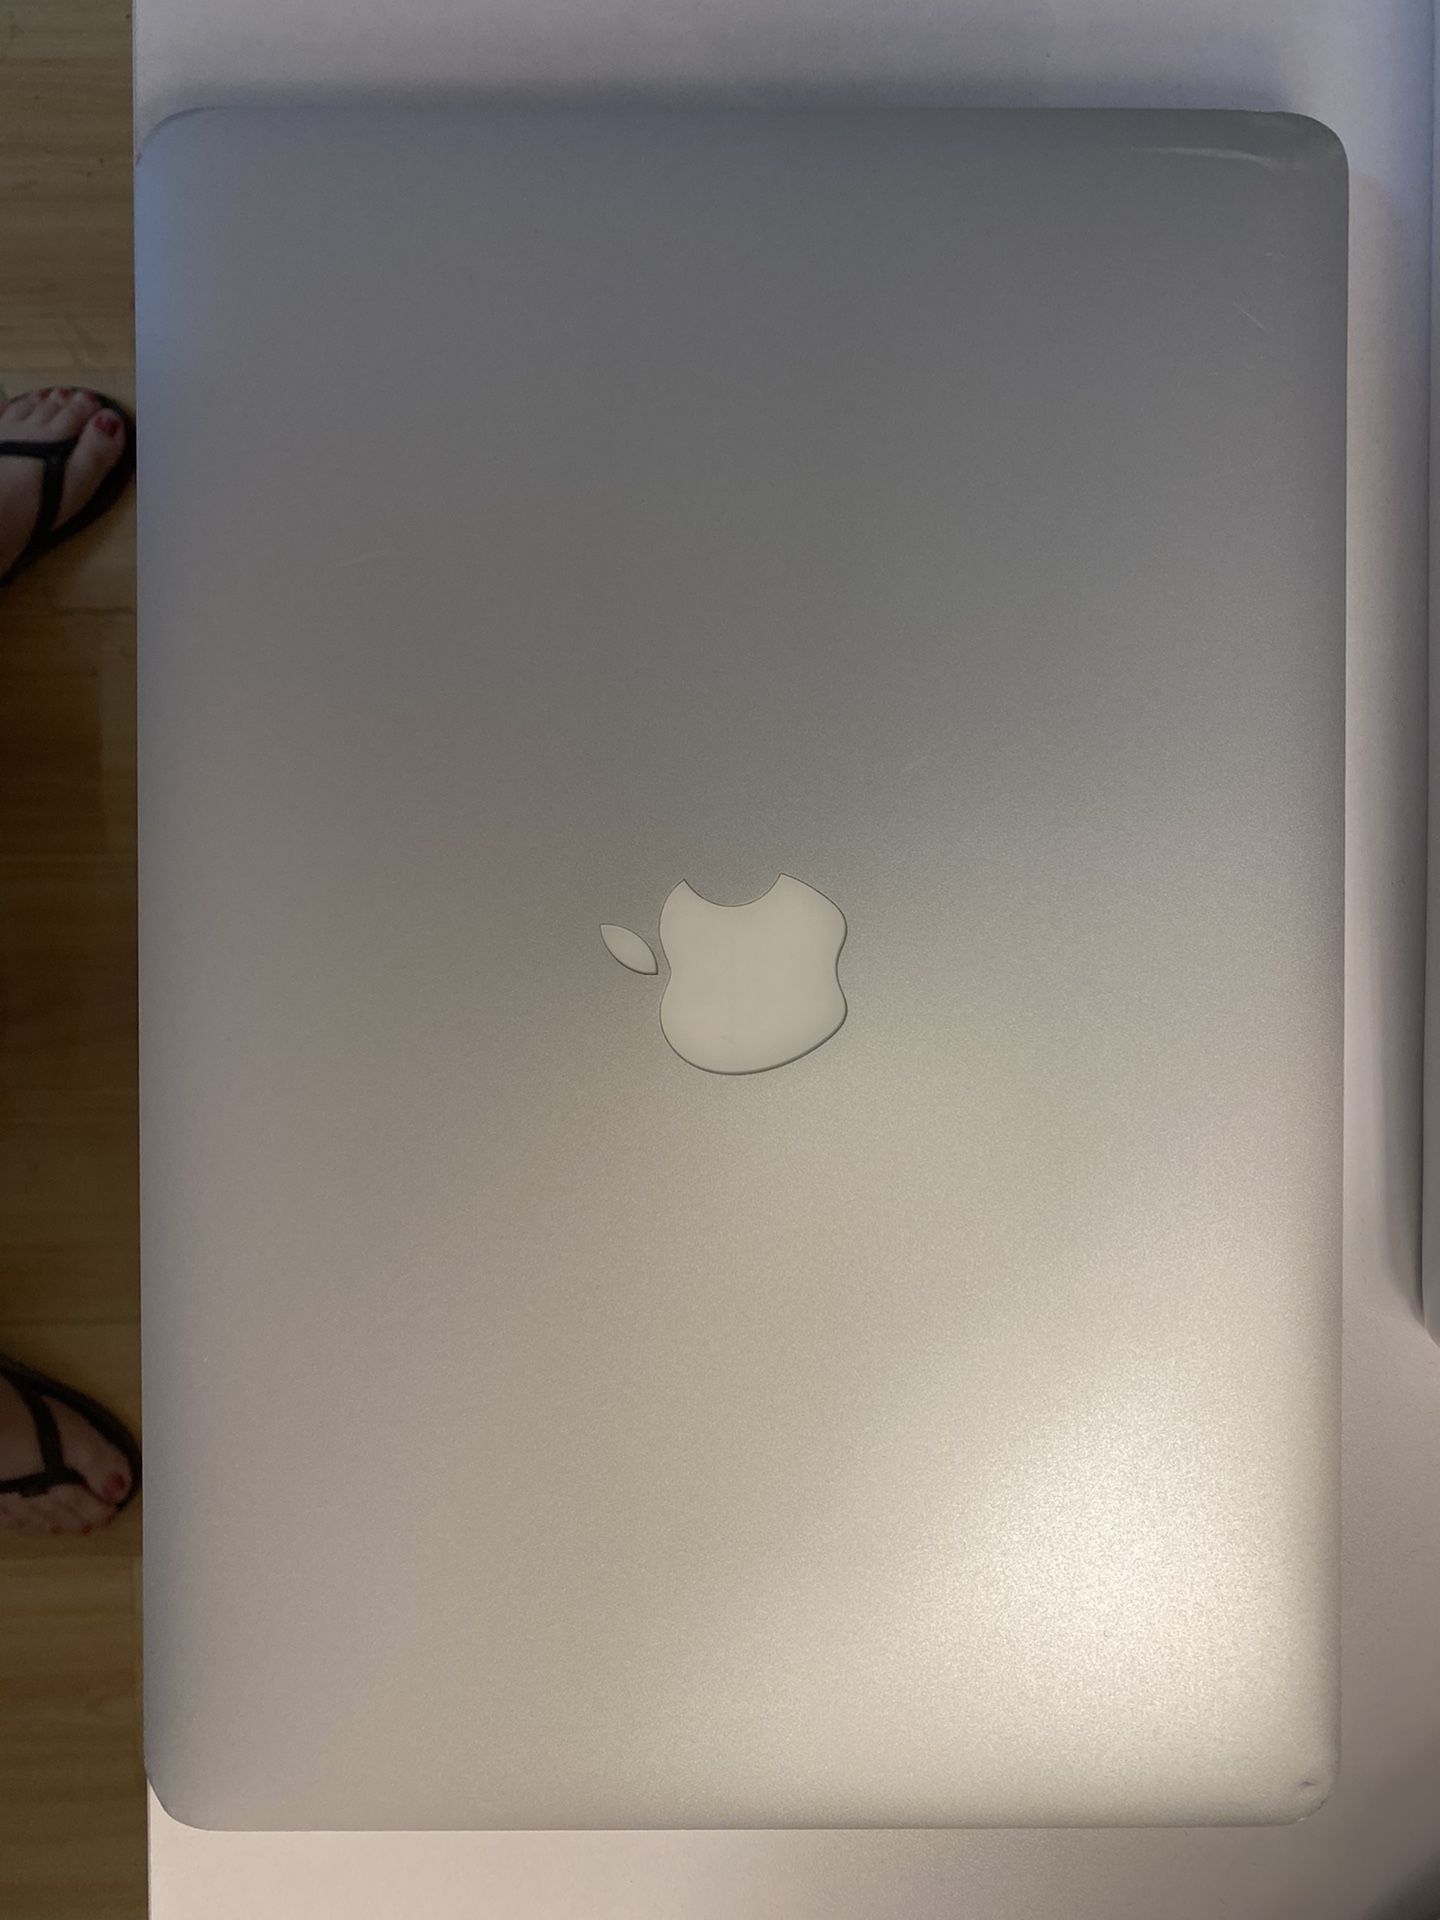 MacBook Air “13 Inch Silver Finish